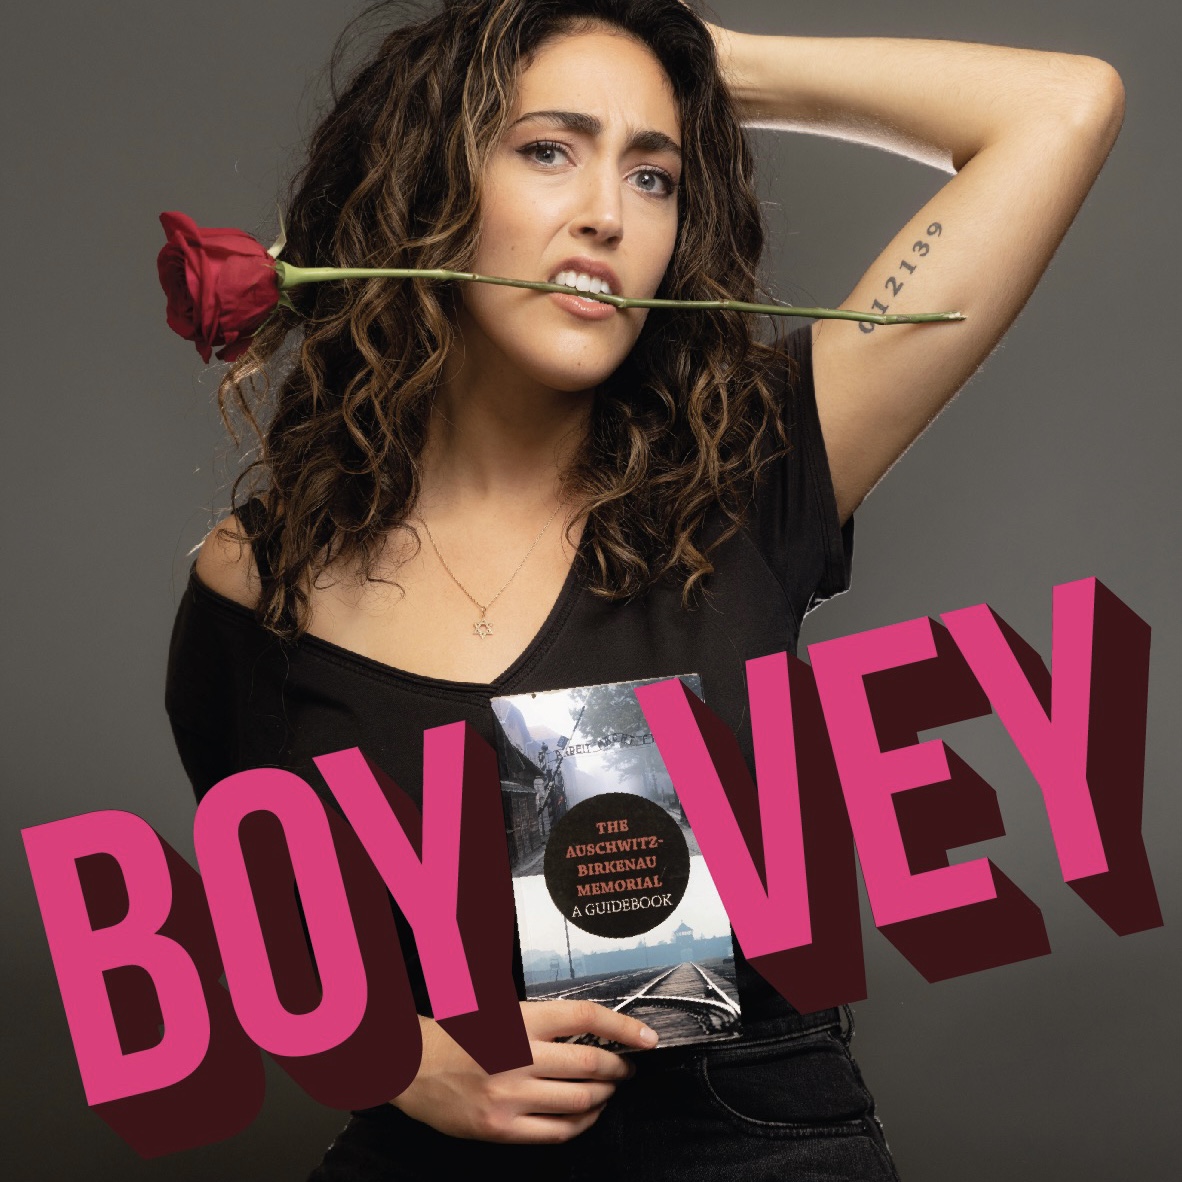 BOY VEY! – A Santa Monica Playhouse Jewish Heritage Series/Hysteria Productions